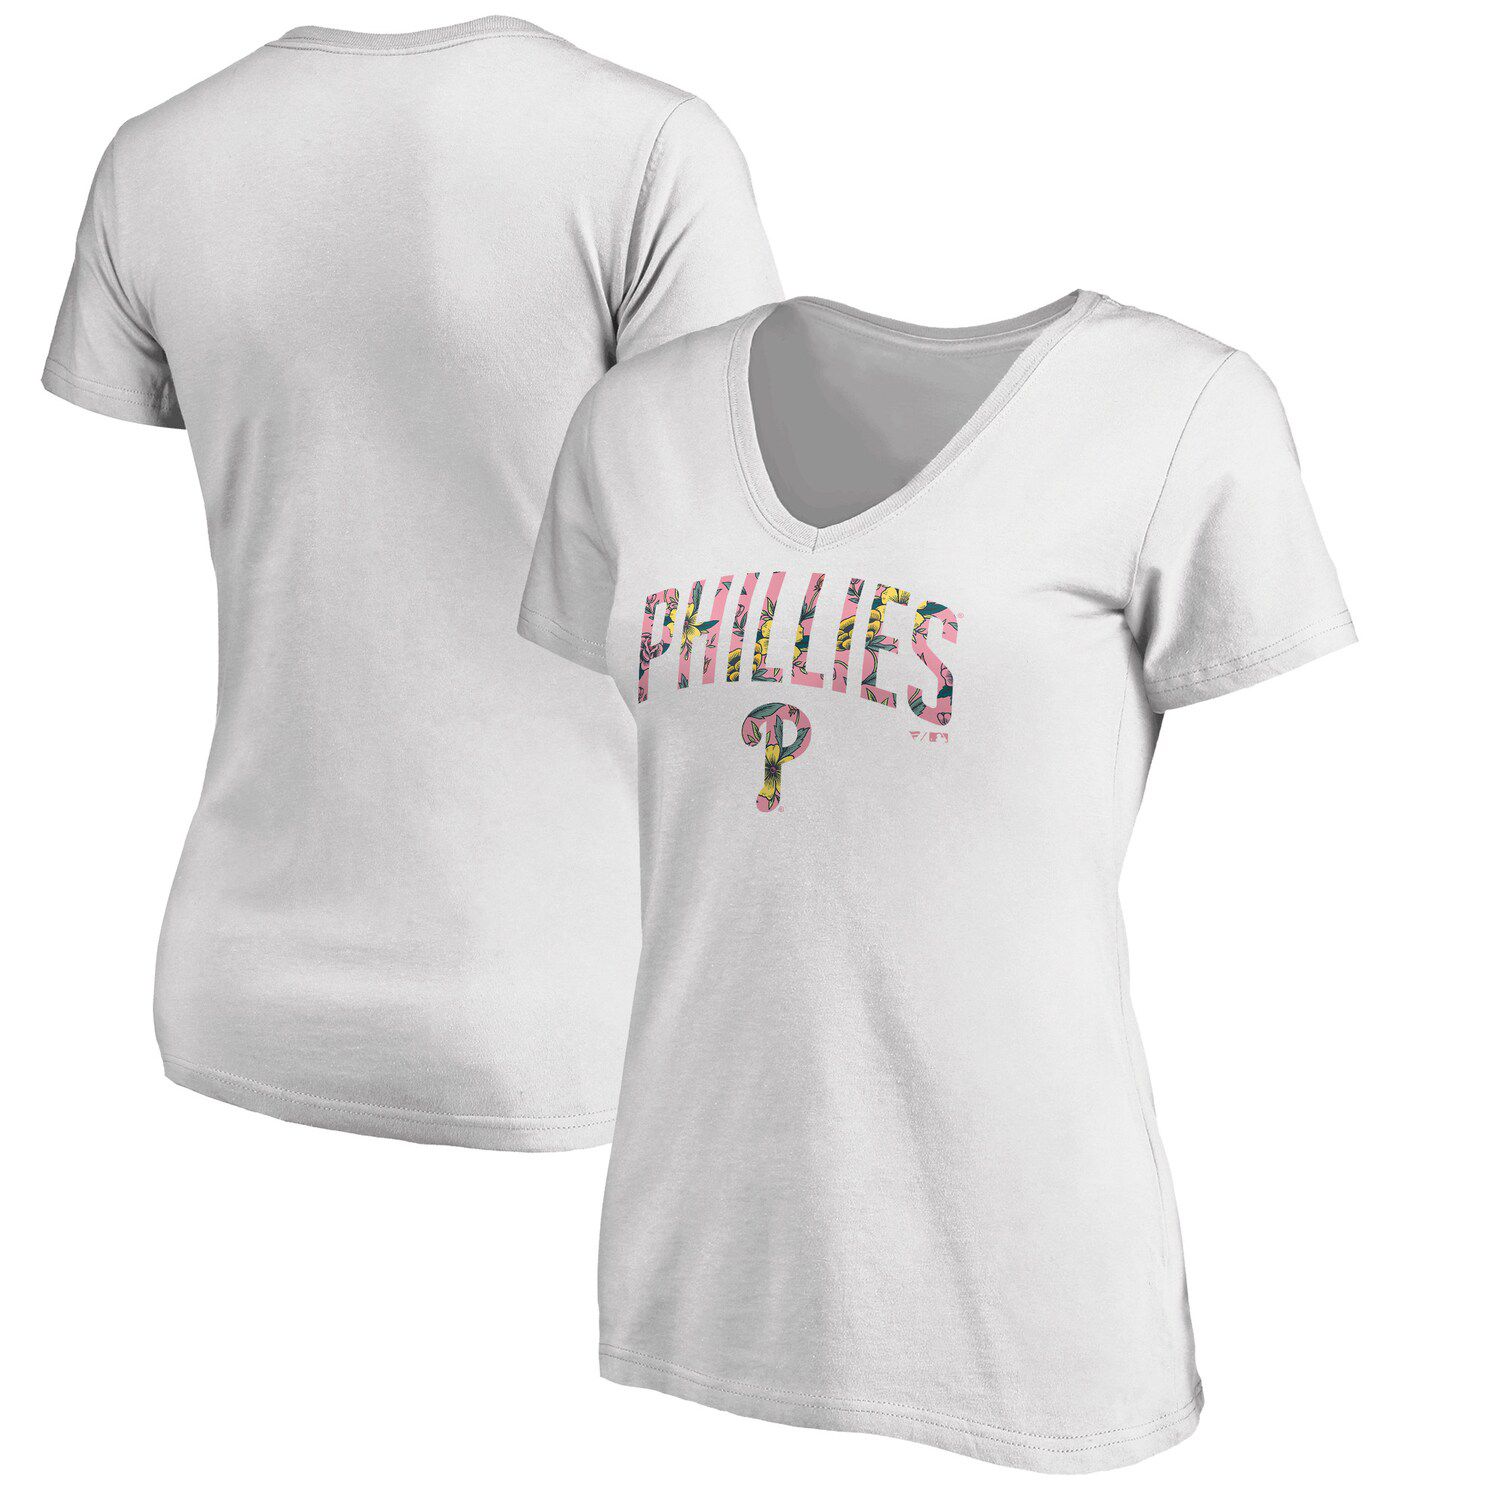 womens phillies shirt